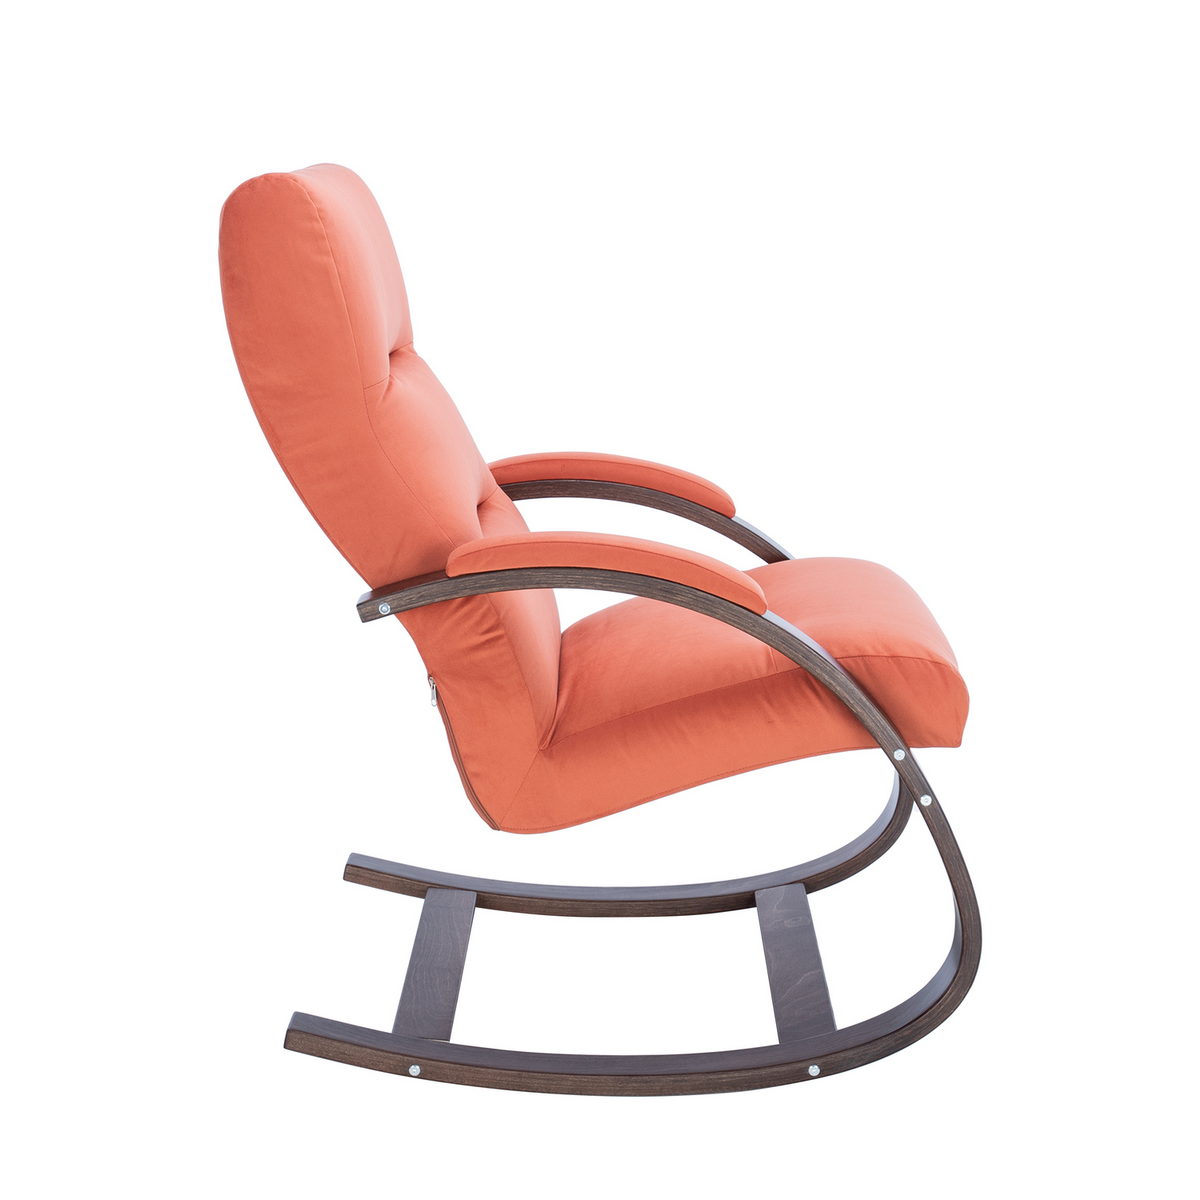 Кресло-качалка Leset Милано (Импэкс). Цвет каркаса: Орех текстура; Цвет обивки: V39 оранжевый